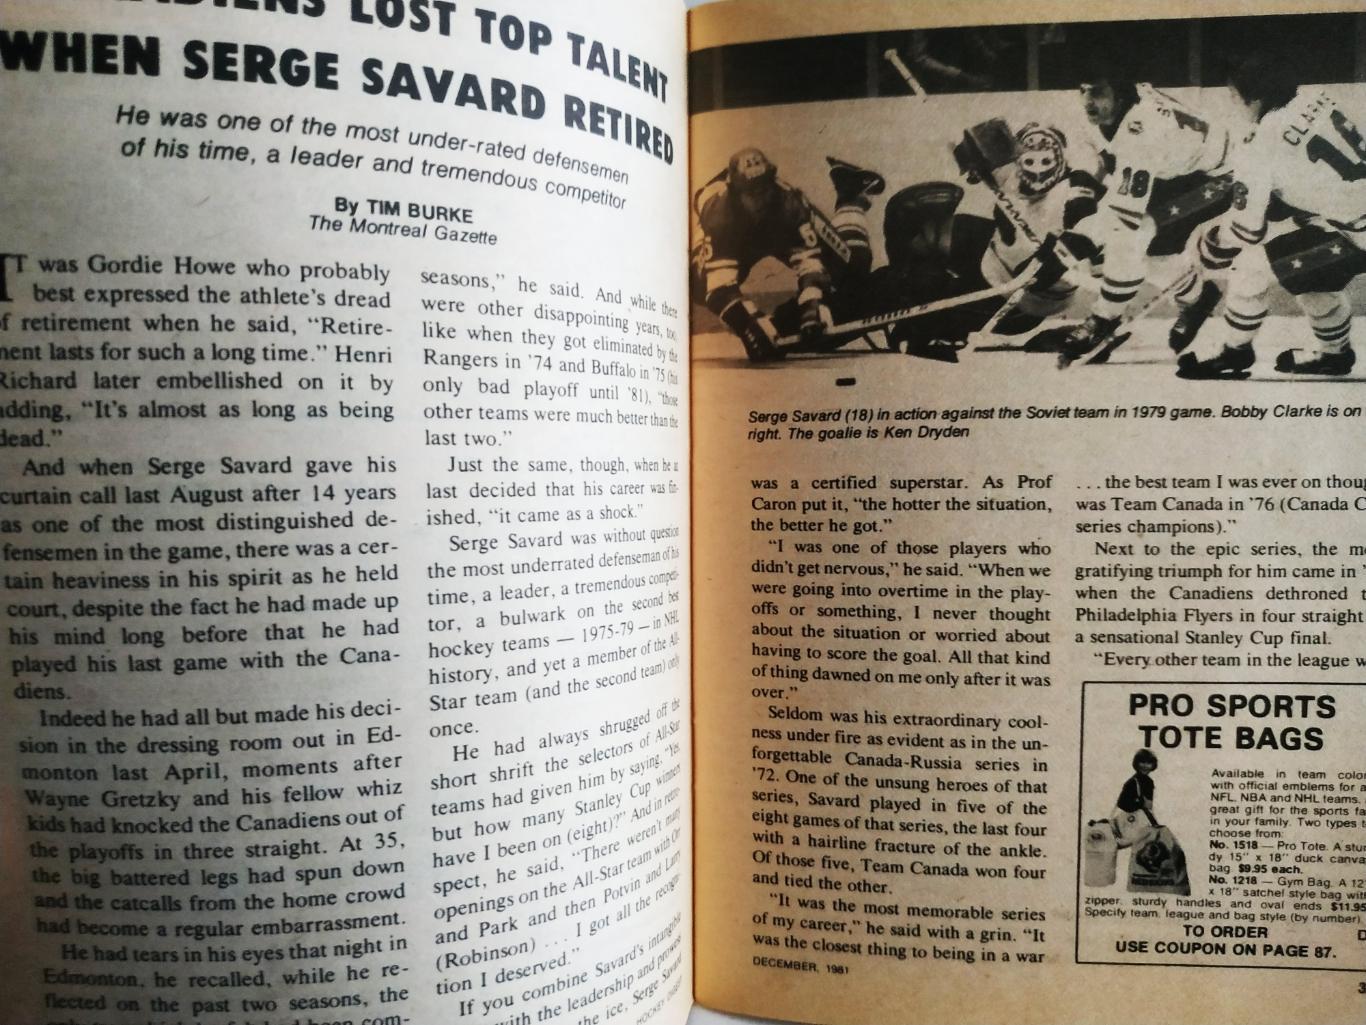 ХОККЕЙ ЖУРНАЛ ЕЖЕМЕСЯЧНИК НХЛ ХОККИ ДАЙДЖЕСТ NHL DECEMBER 1981 THE HOCKEY DIGEST 3